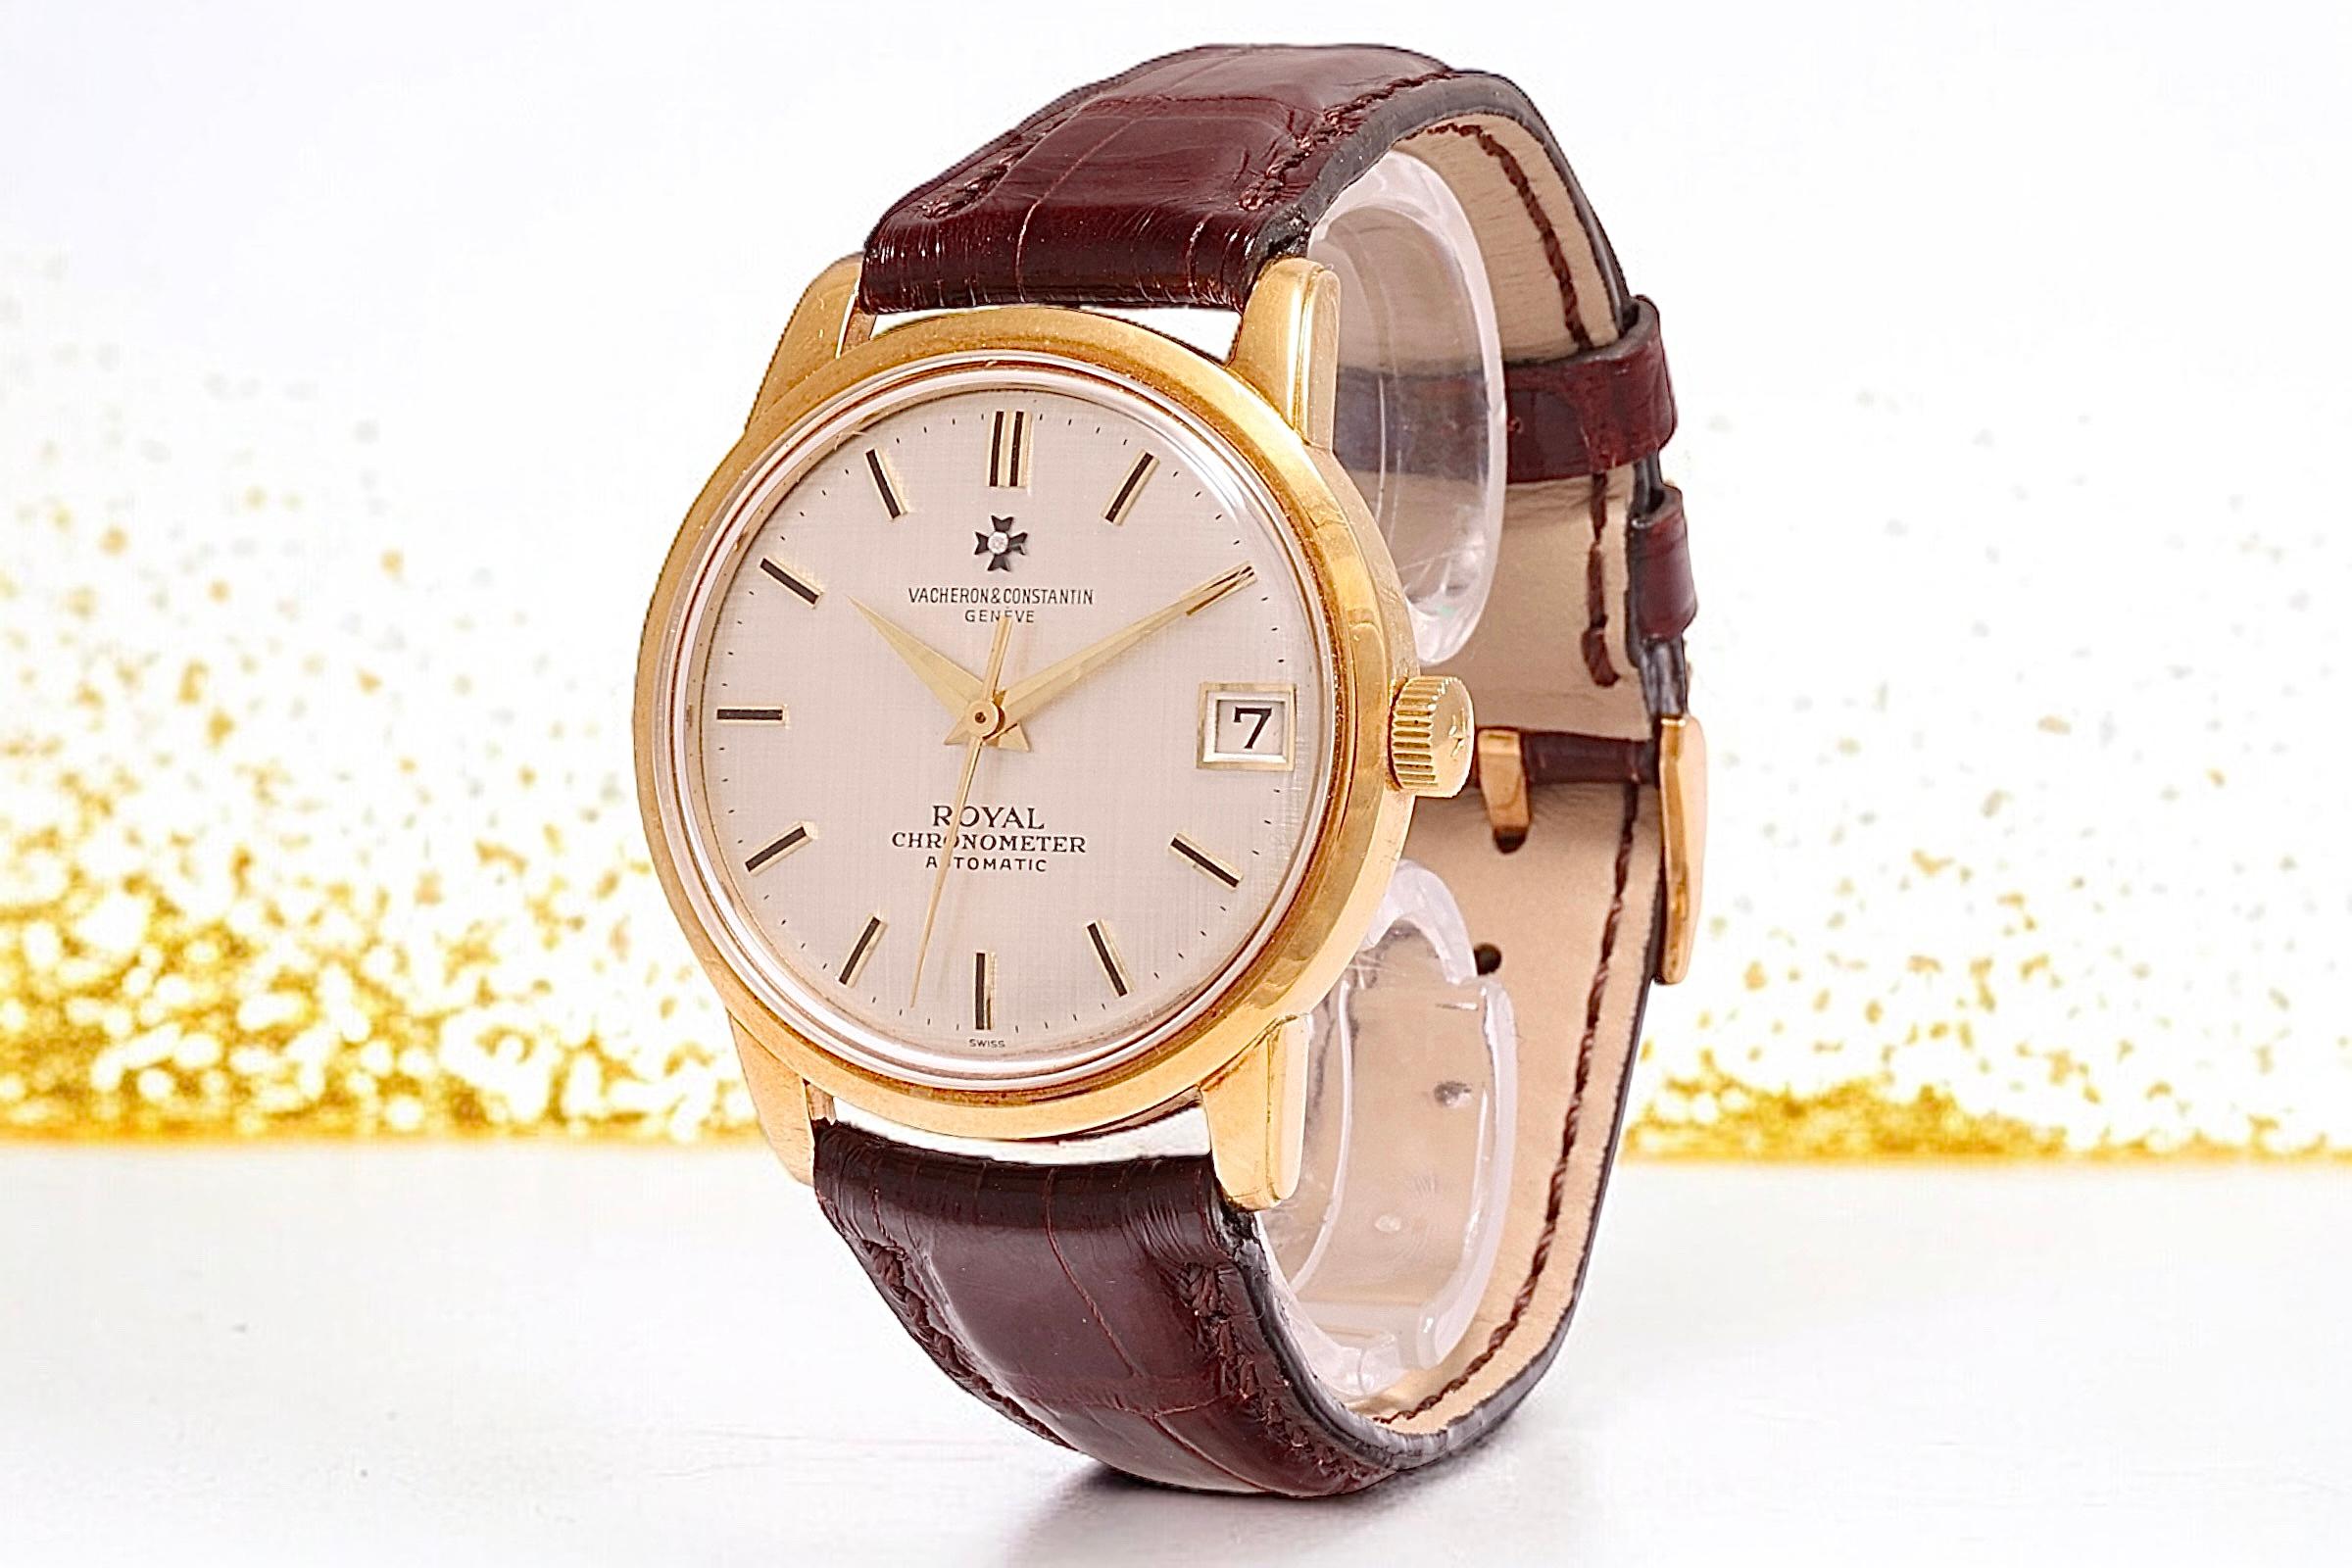 Vacheron Constantin Chronometre Royal Wrist Watch For Sale 4